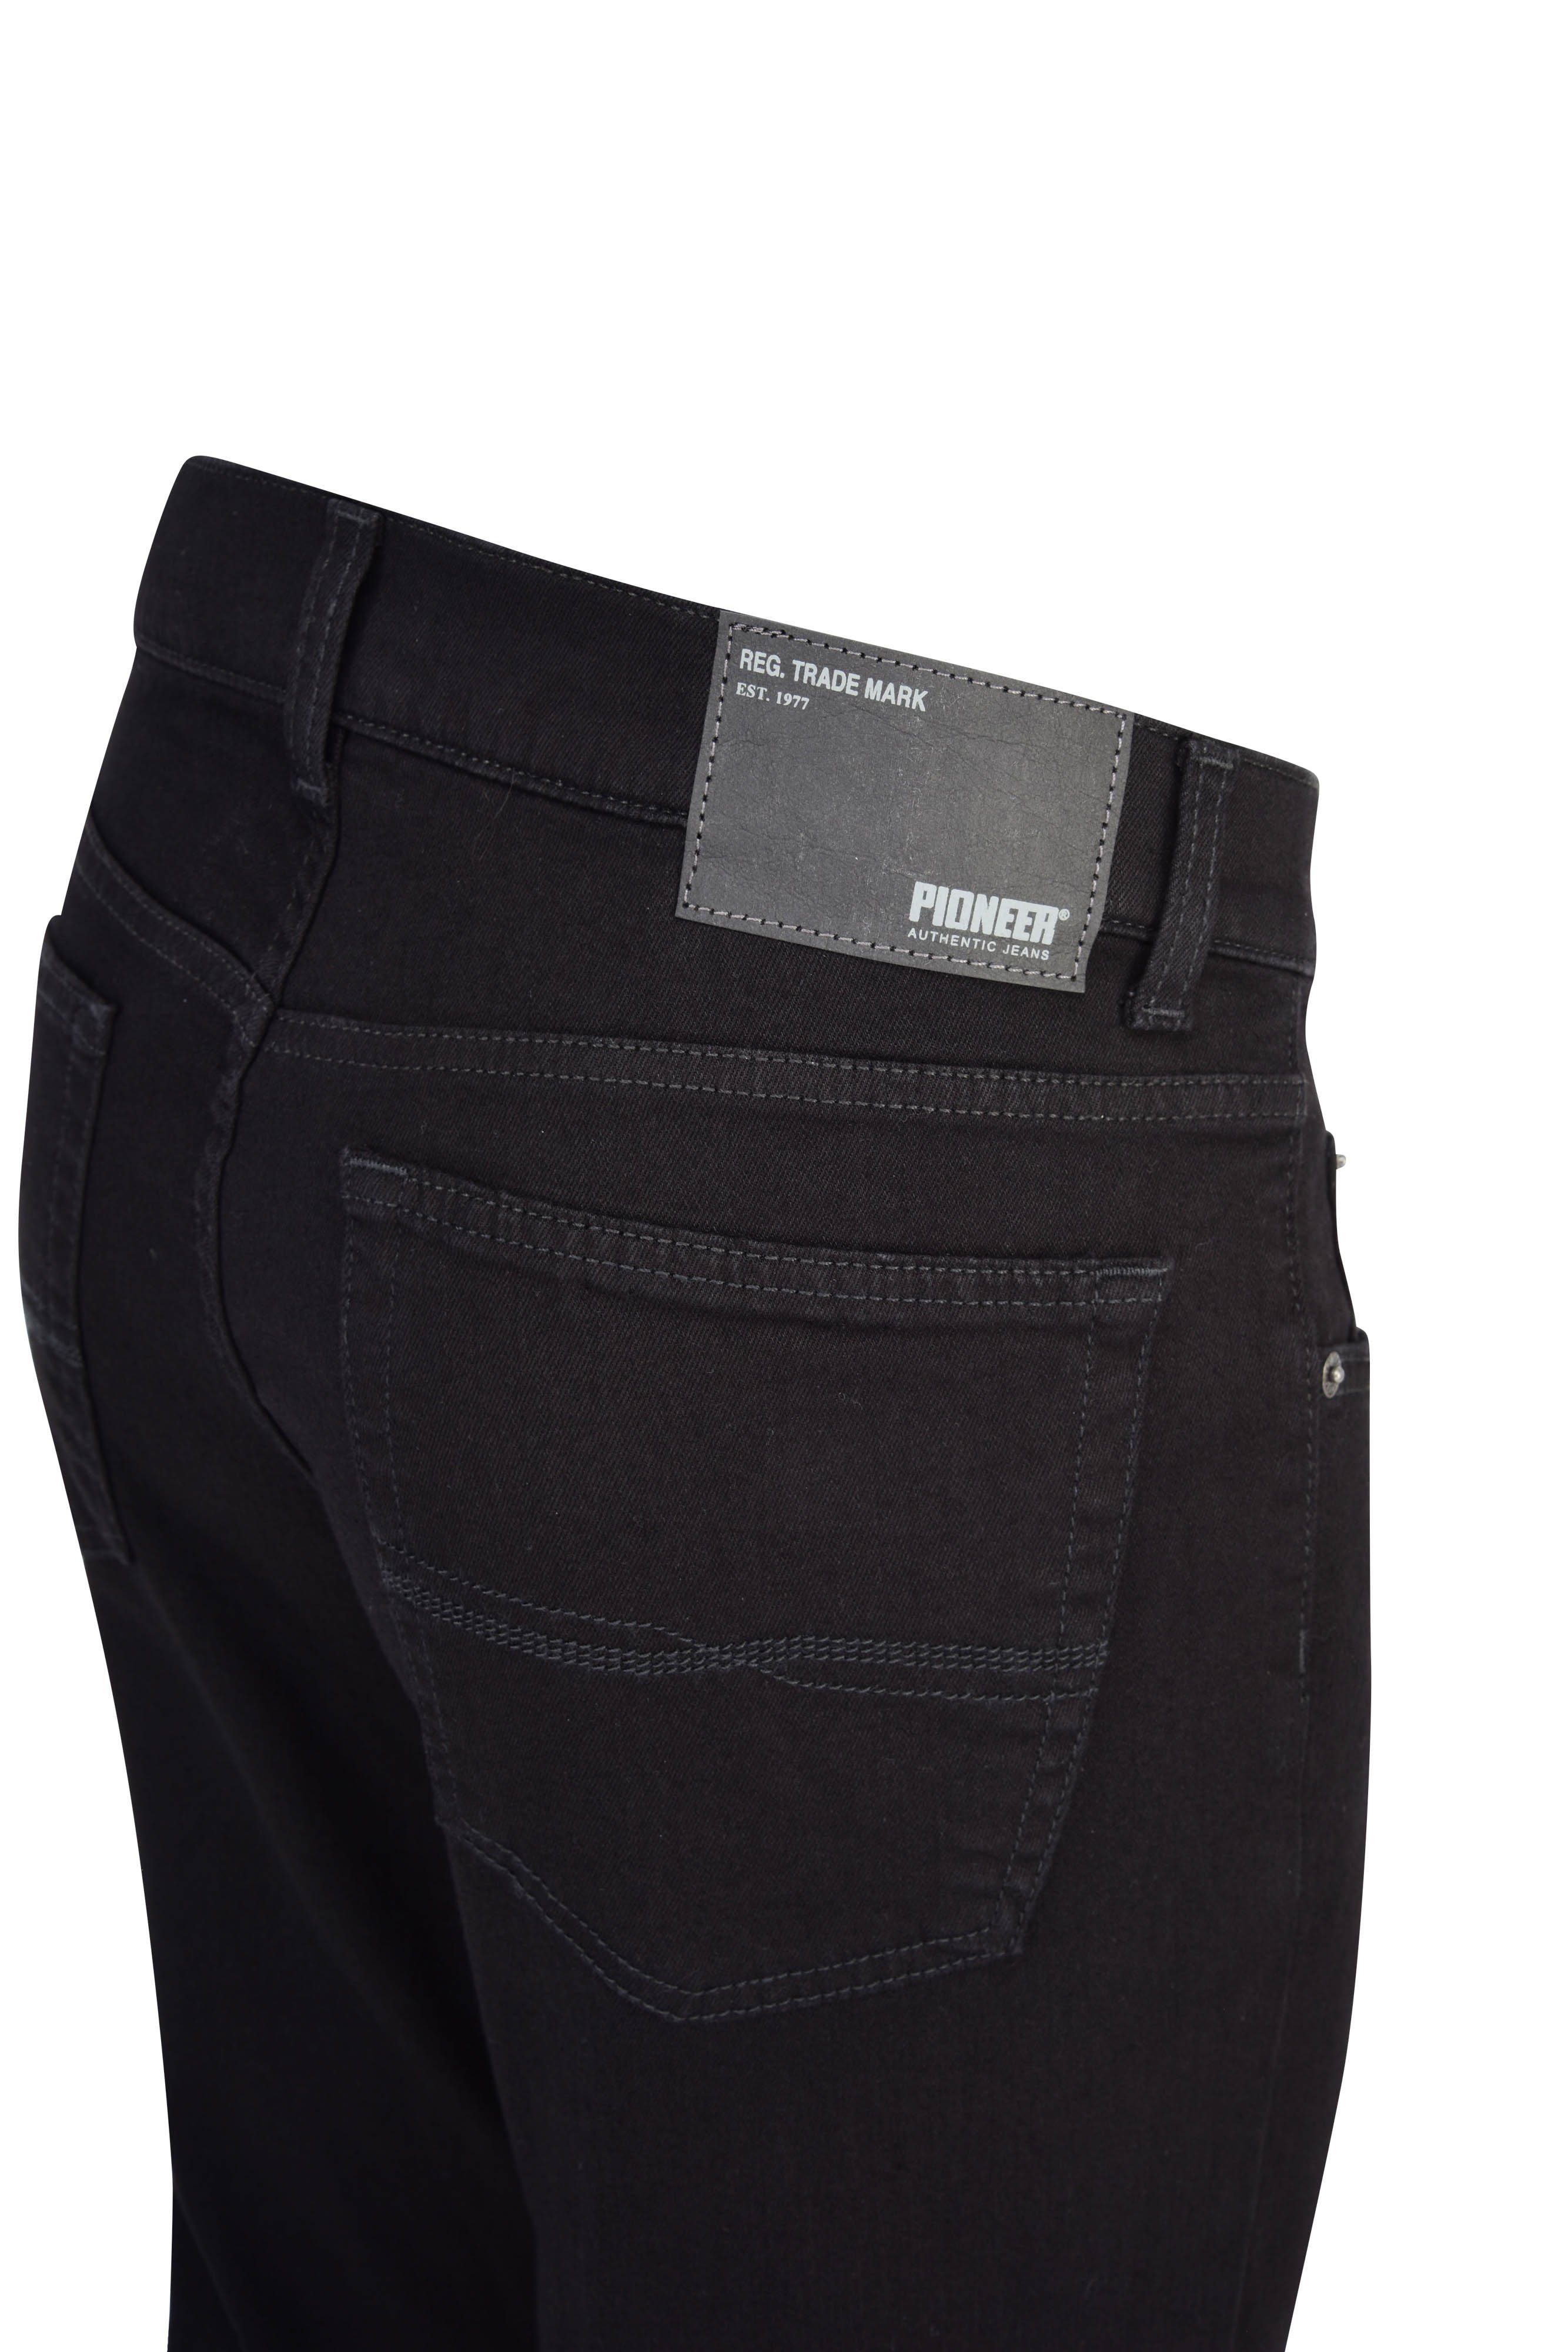 Manufaktur Pioneer 5-Pocket-Jeans PIONEER premium - RON 1184 Edition 9491.11 Authentic Jeans black Jeans